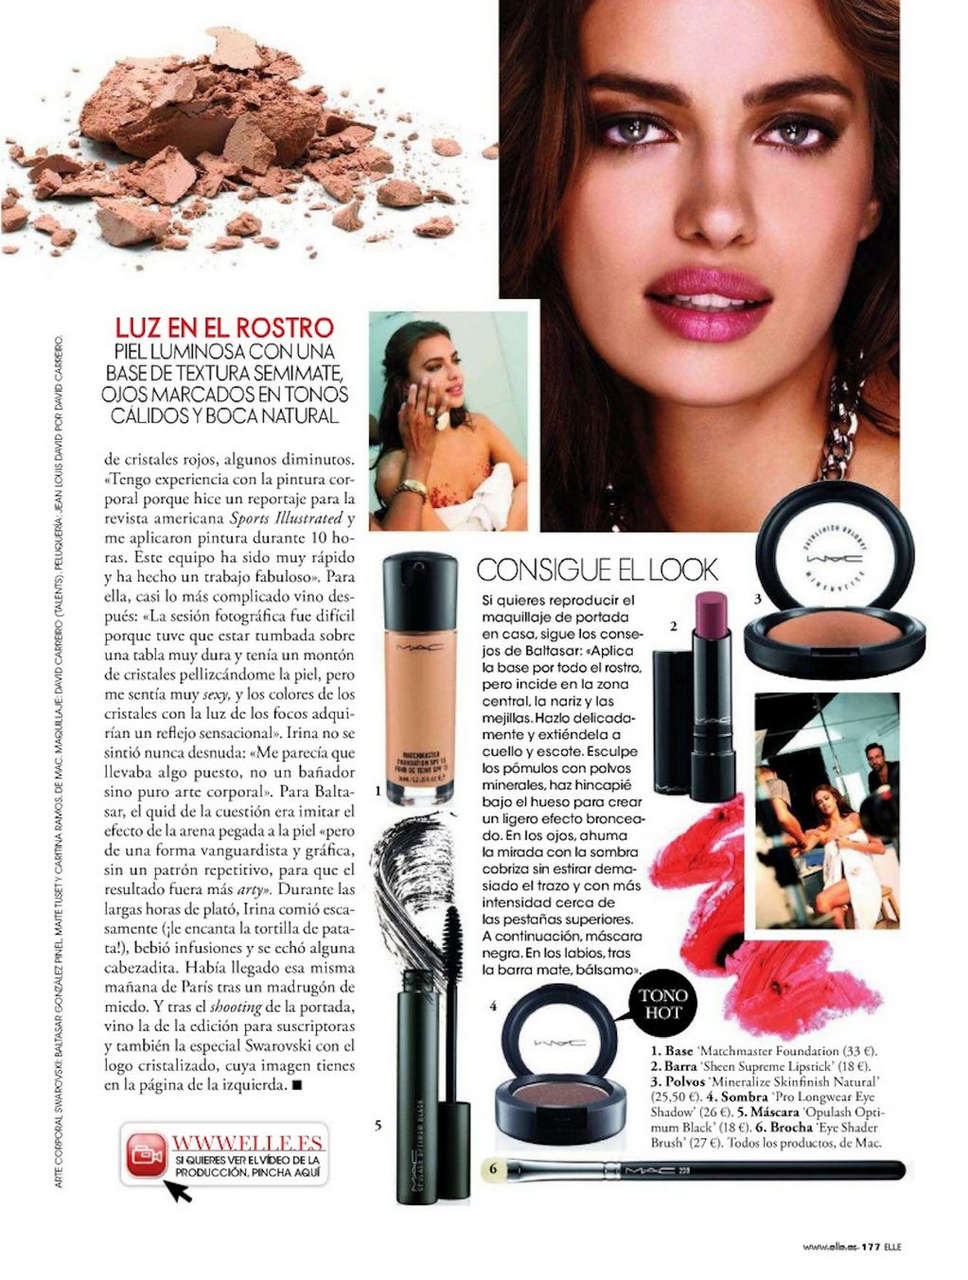 Irina Shayk Hot For Elle Magazine